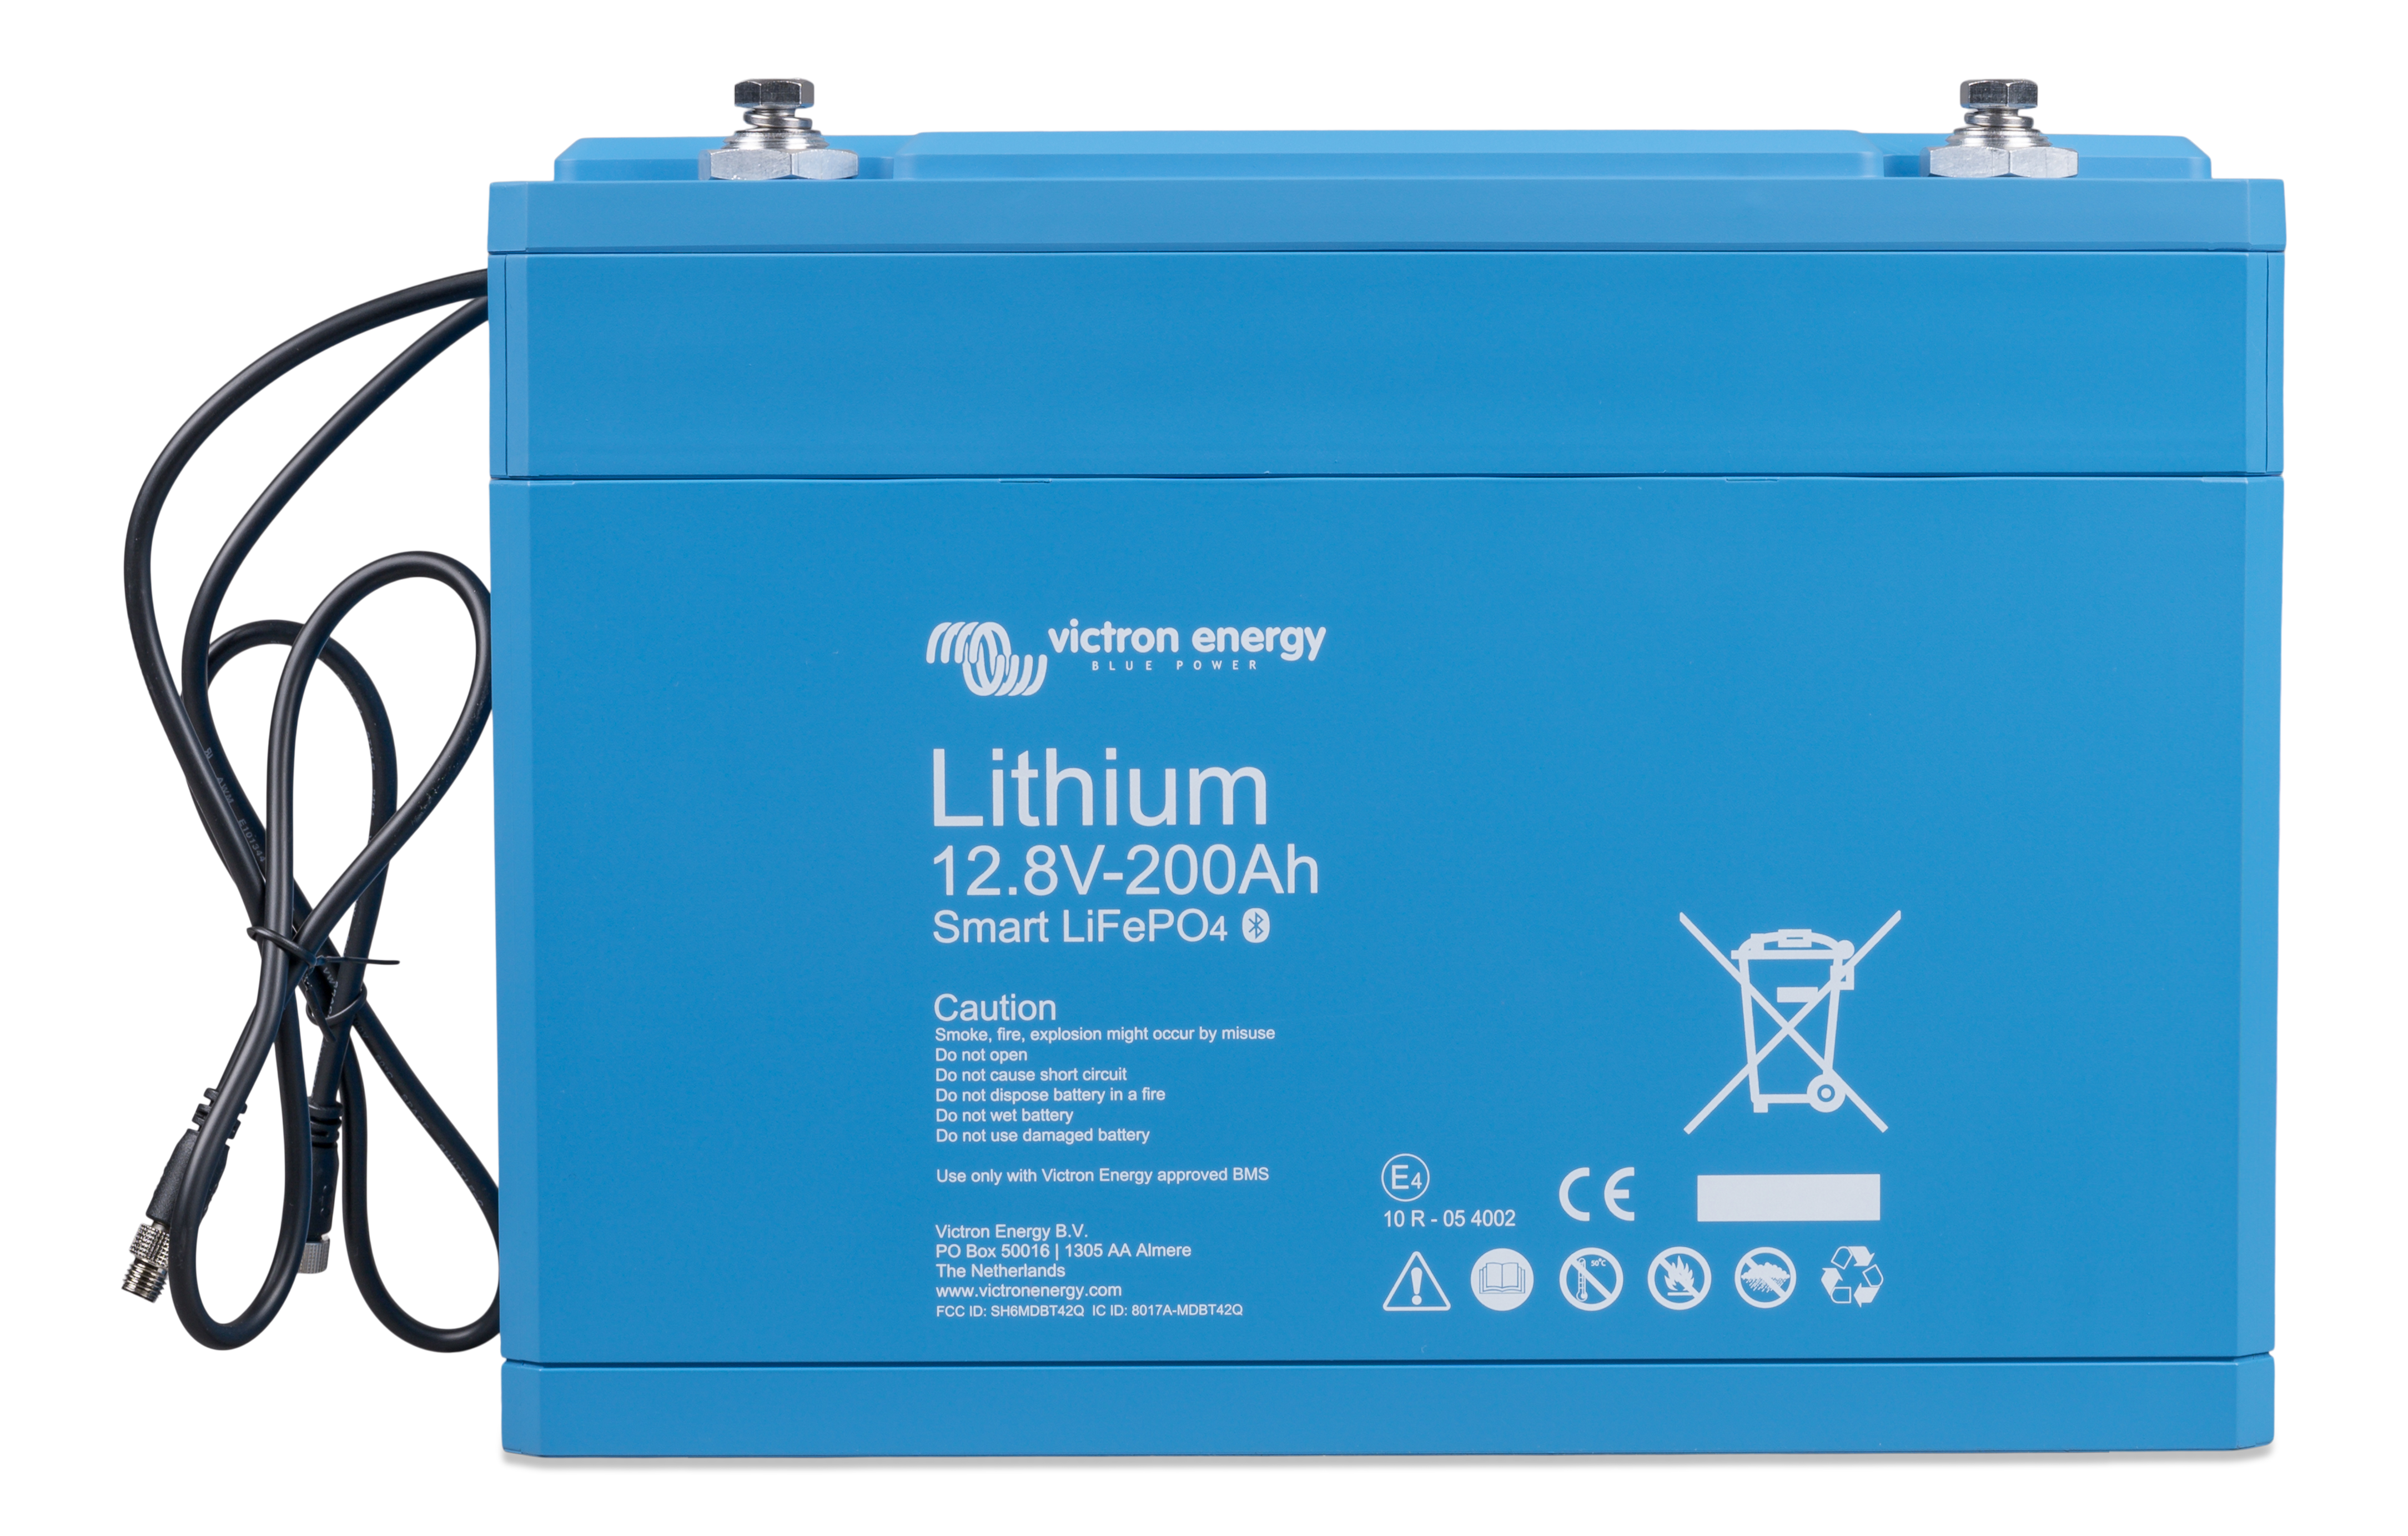 12V 100AH Lifepo4 lithium battery bluetooth BMS APP 12.8V USB for